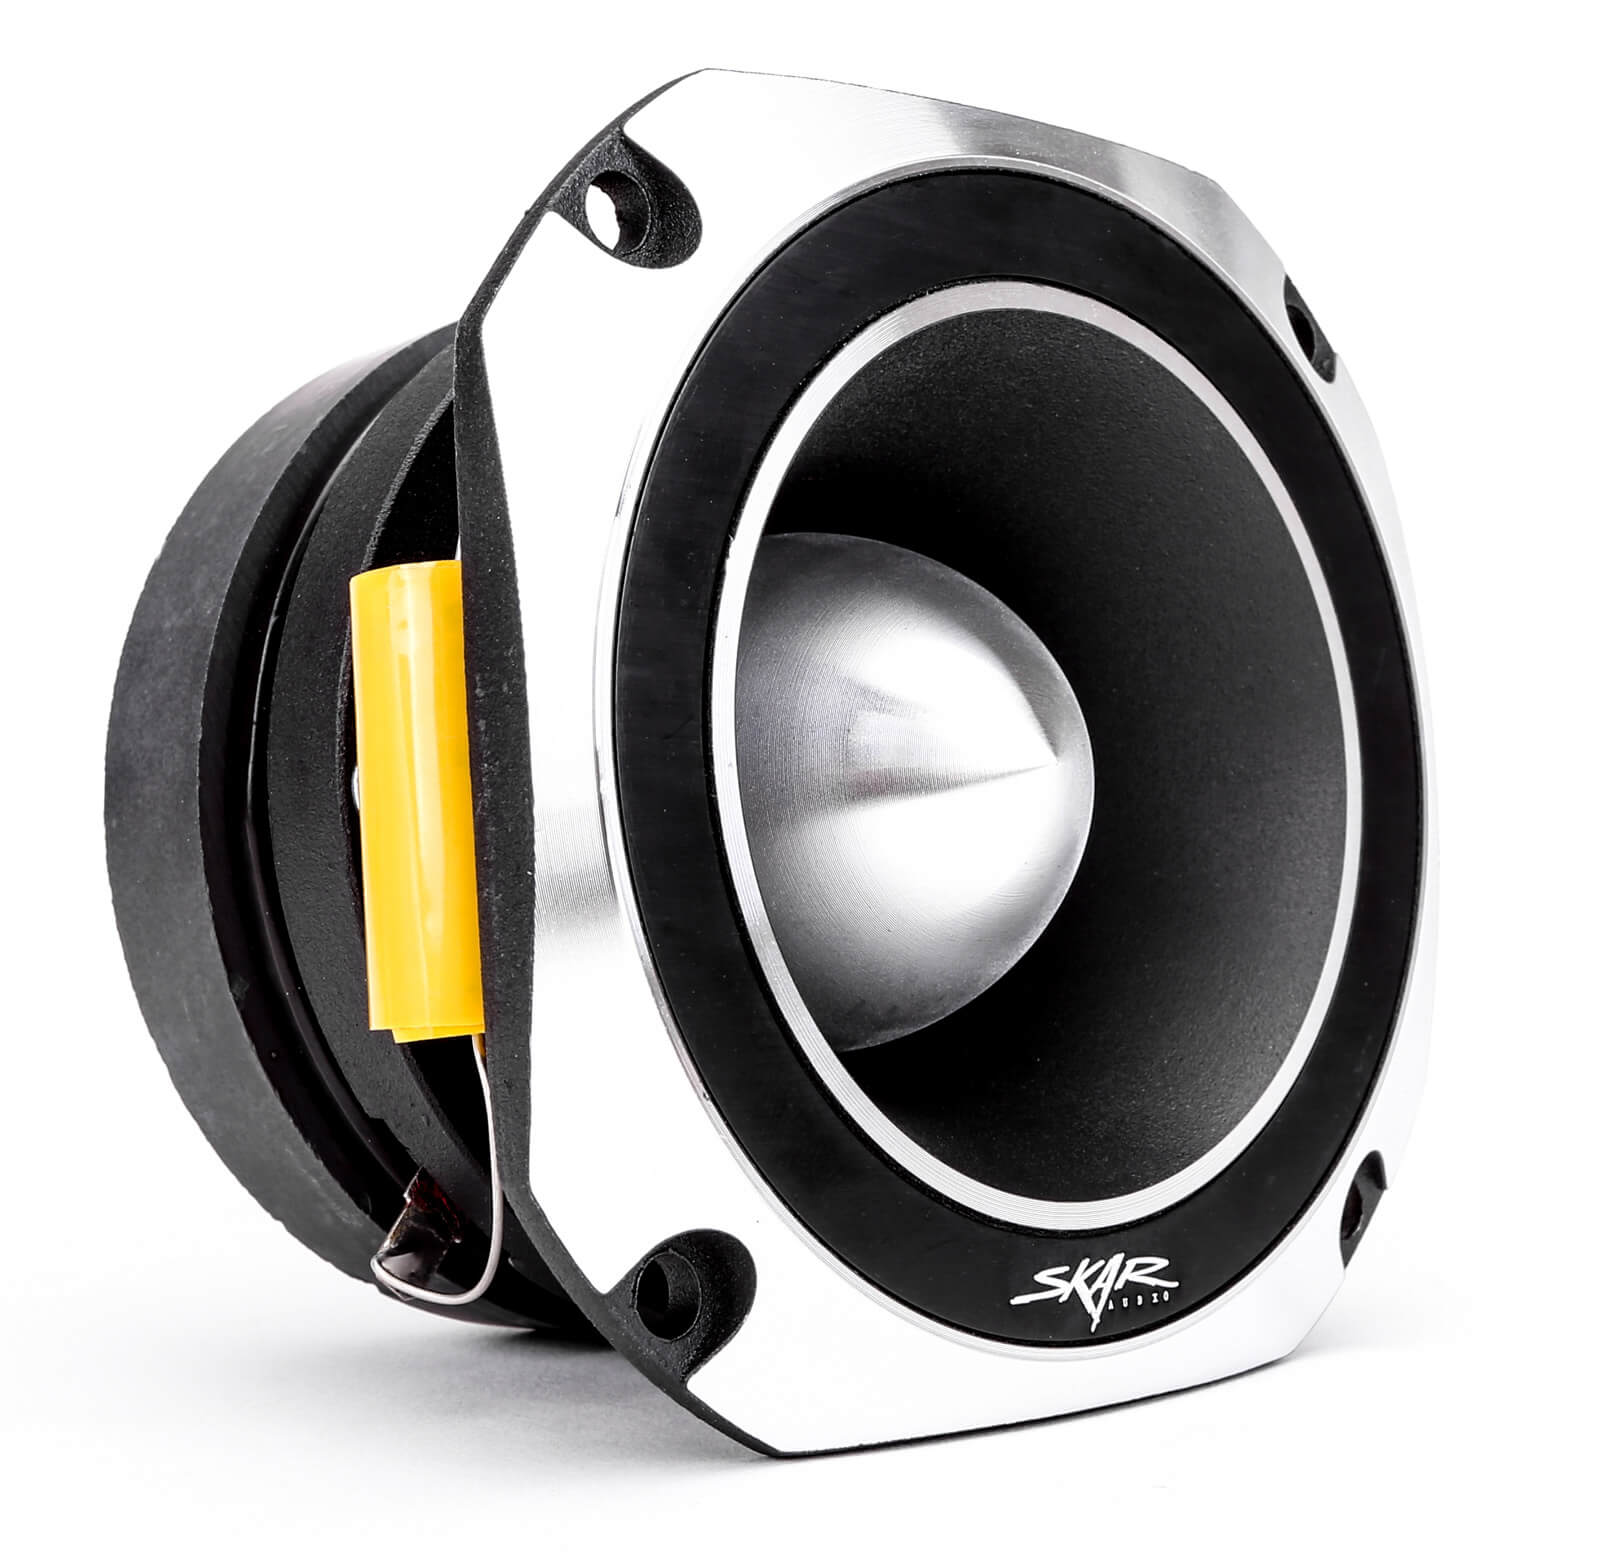 Skar Audio VX4-ST 4-inch 600 Watt Max Power Bullet Tweeter - Angle View